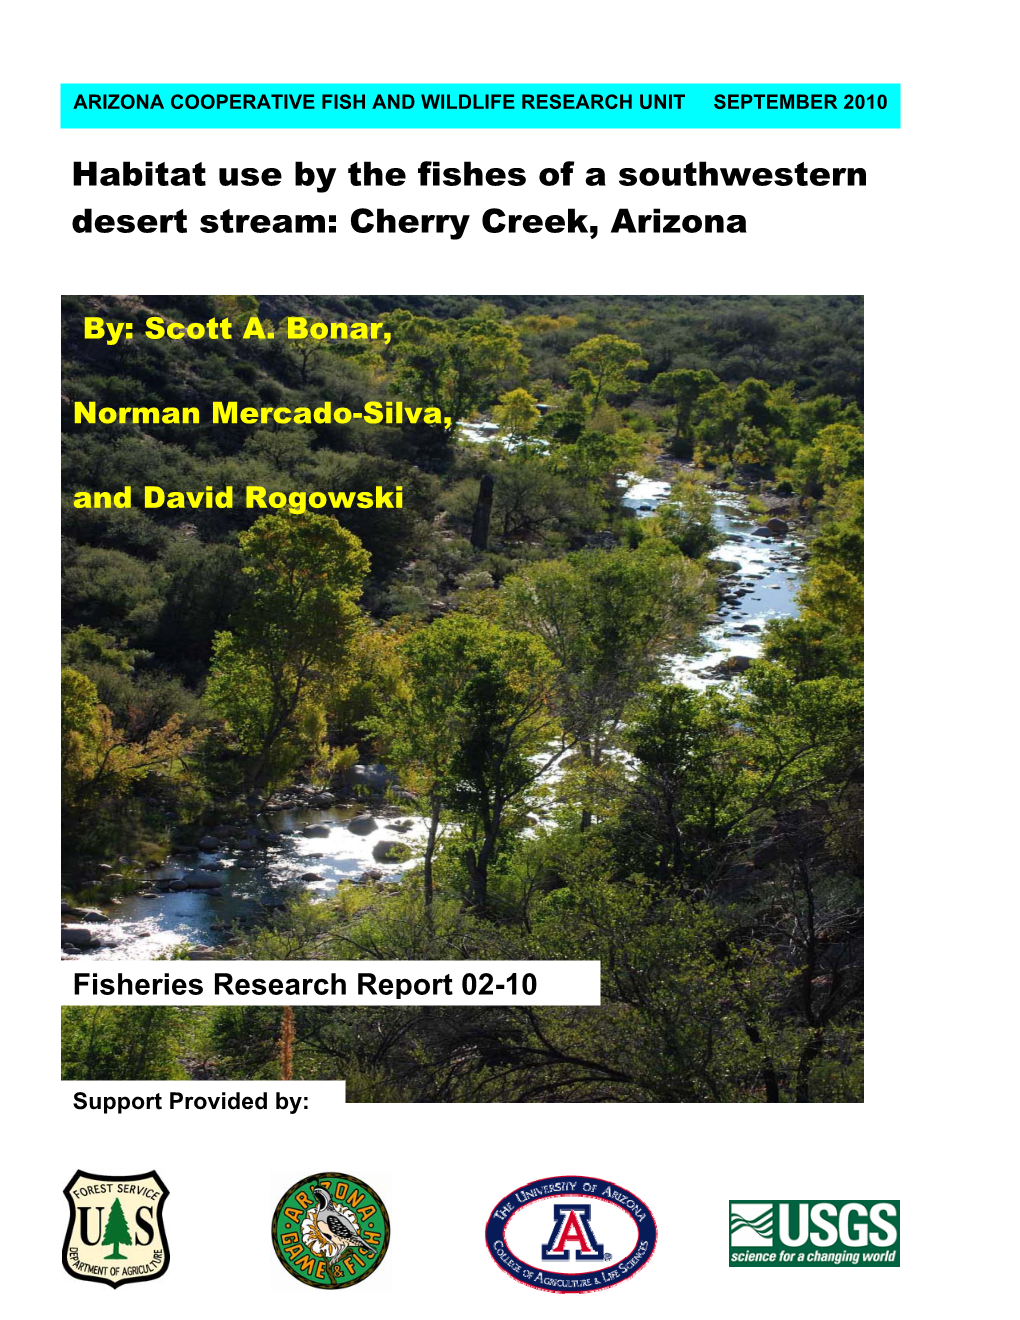 Habitat Use by the Fishes of a Southwestern Desert Stream: Cherry Creek, Arizona